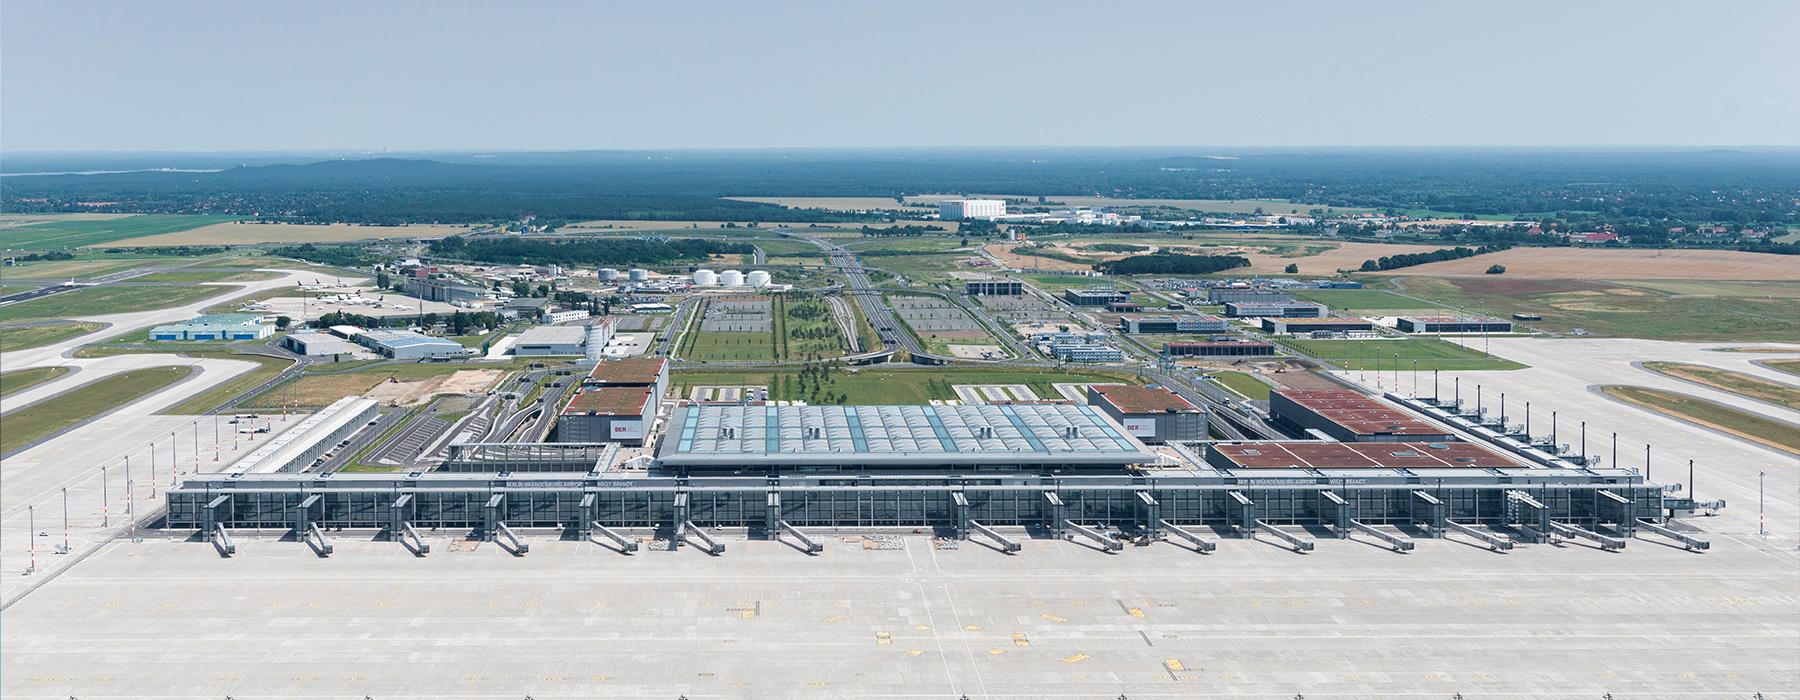 Port lotniczy Berlin-Brandenburg